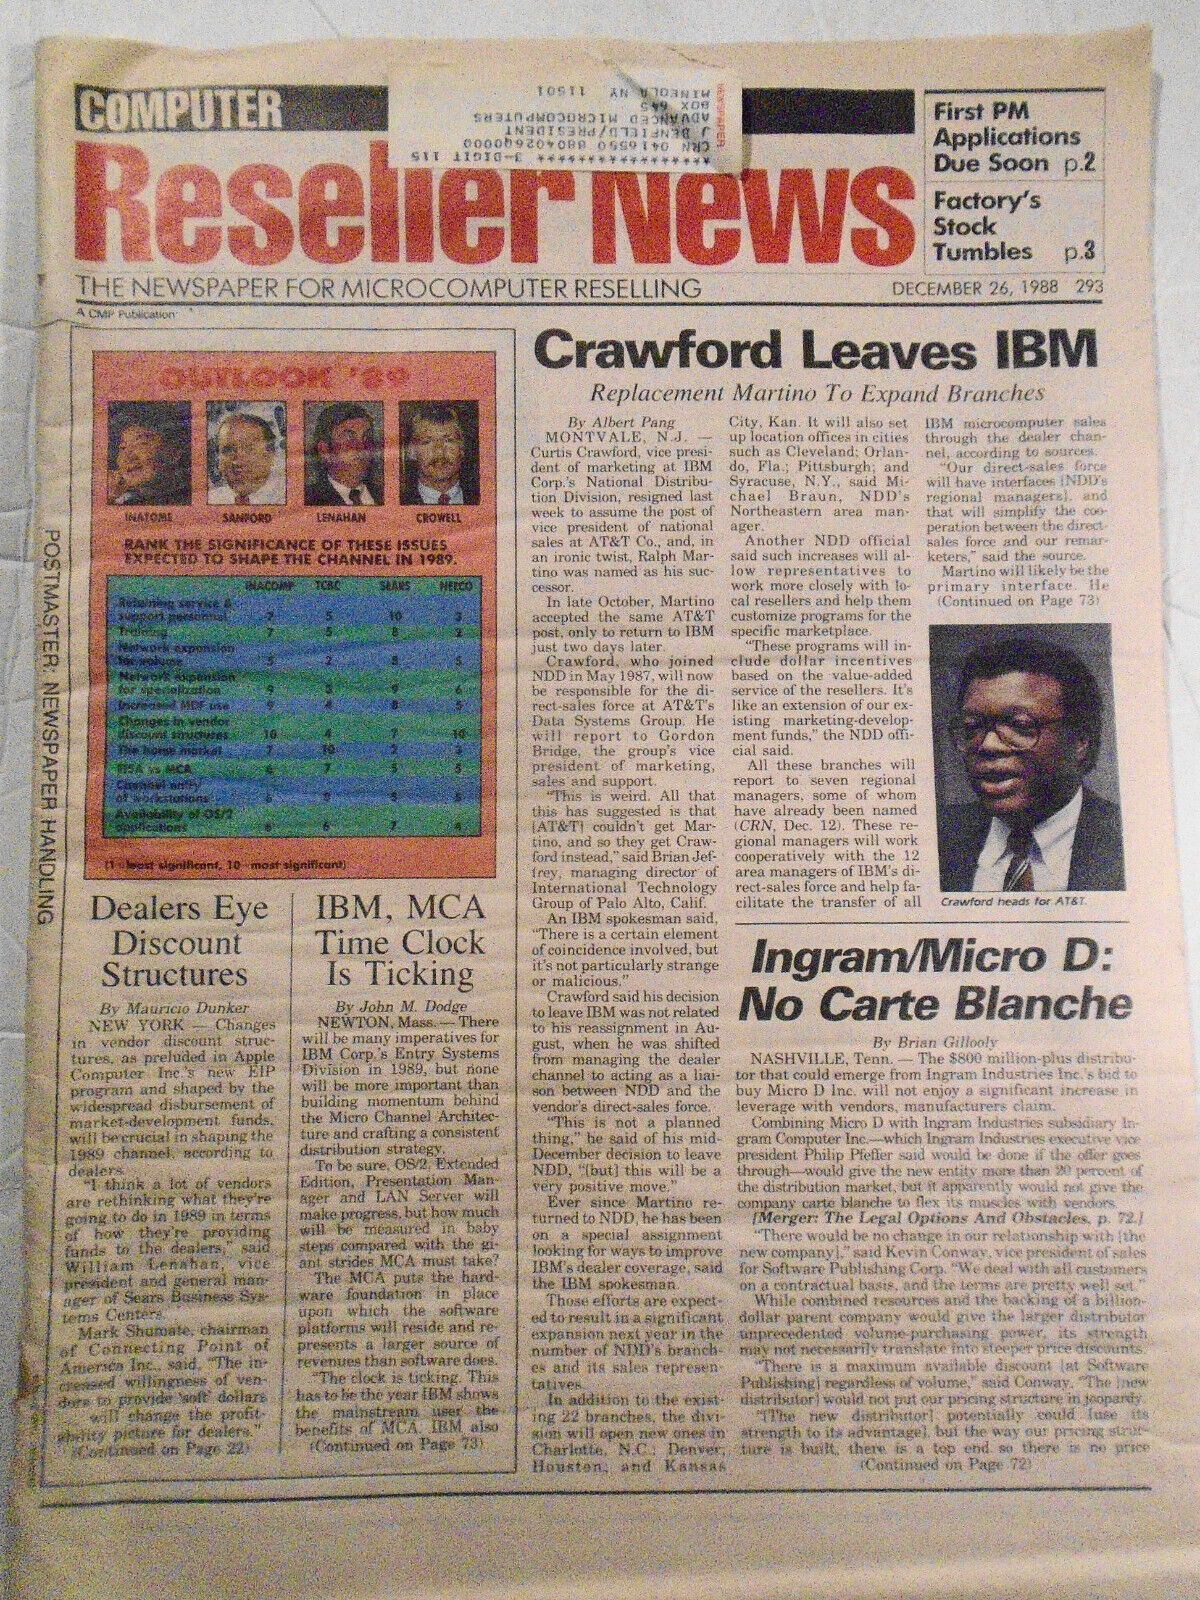 Computer Reseller News December 26, 1988 - Crawford leaves IBM for AT&T, etc